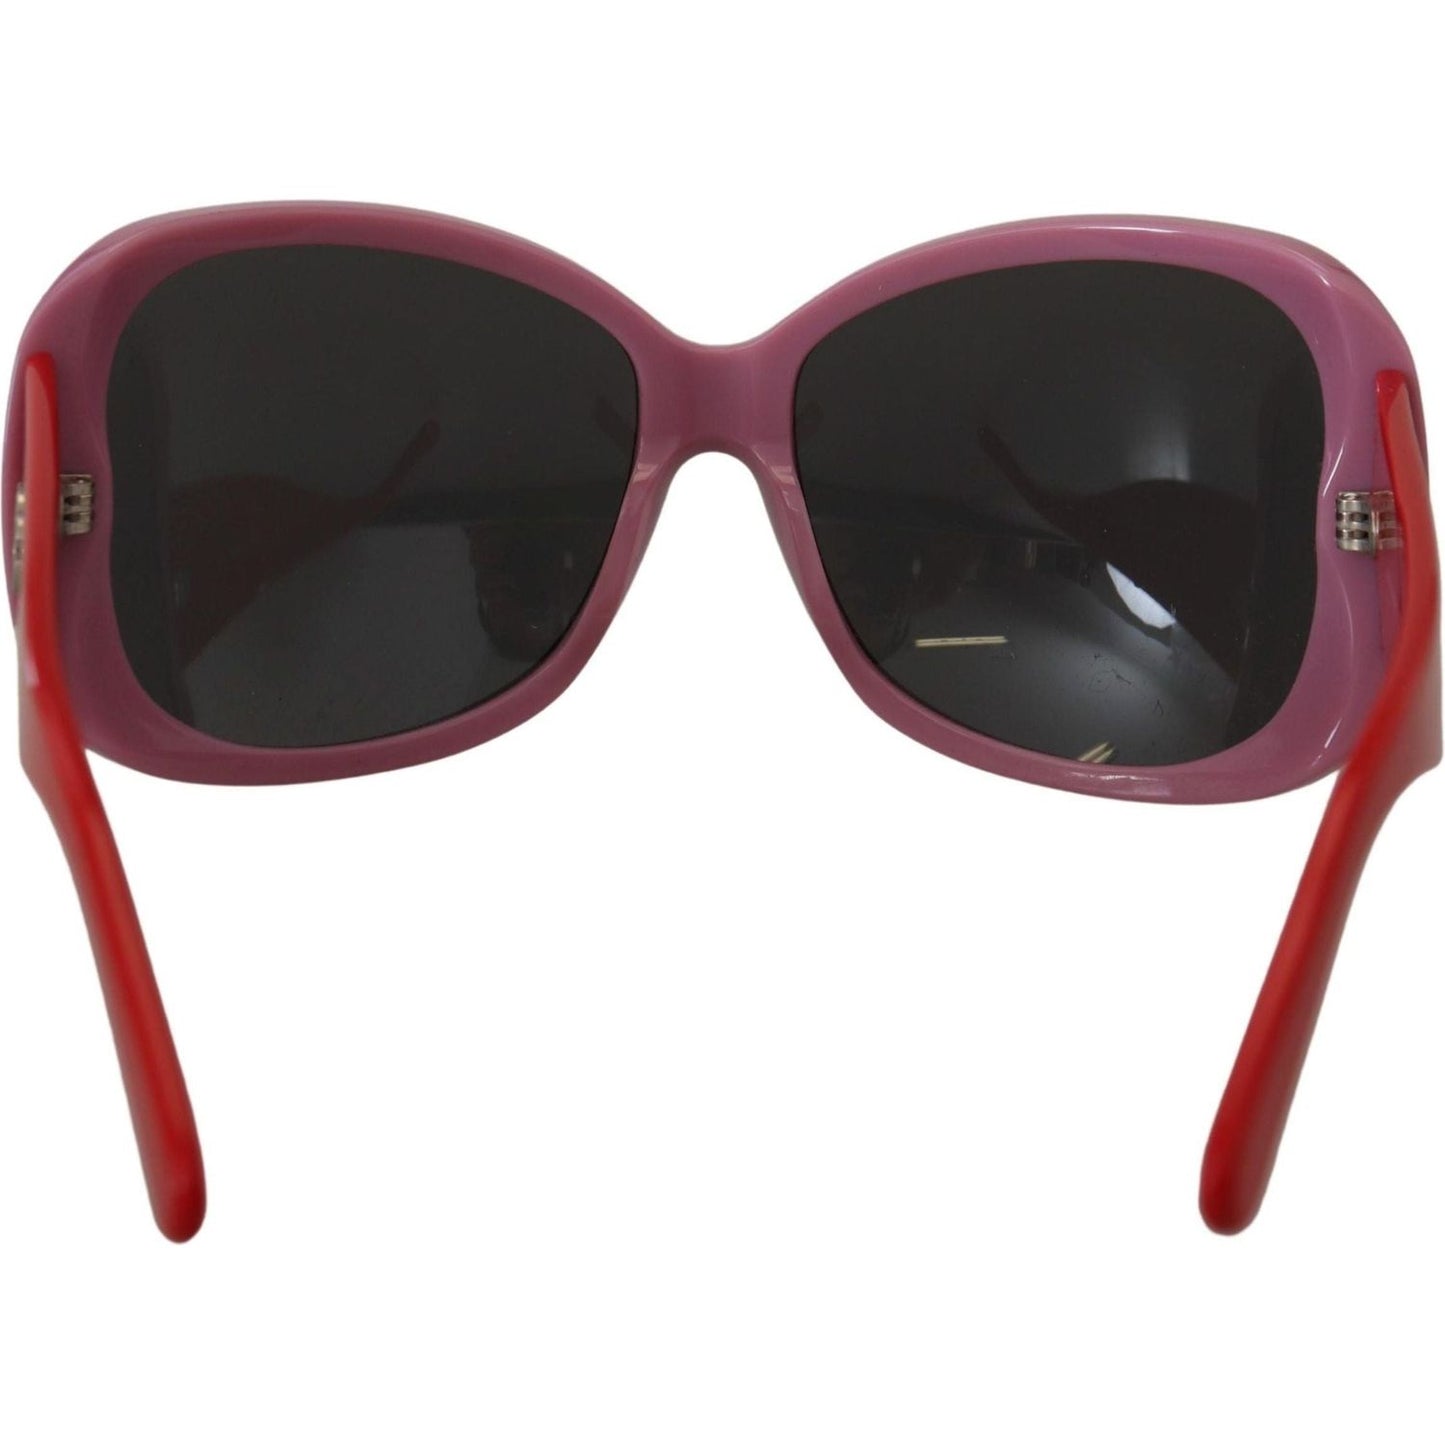 Dolce & Gabbana Chic Oversized UV-Protection Sunglasses pink-red-plastic-frame-oversized-dg4033-sunglasses IMG_4787-1-scaled-eb5b927d-bf5.jpg